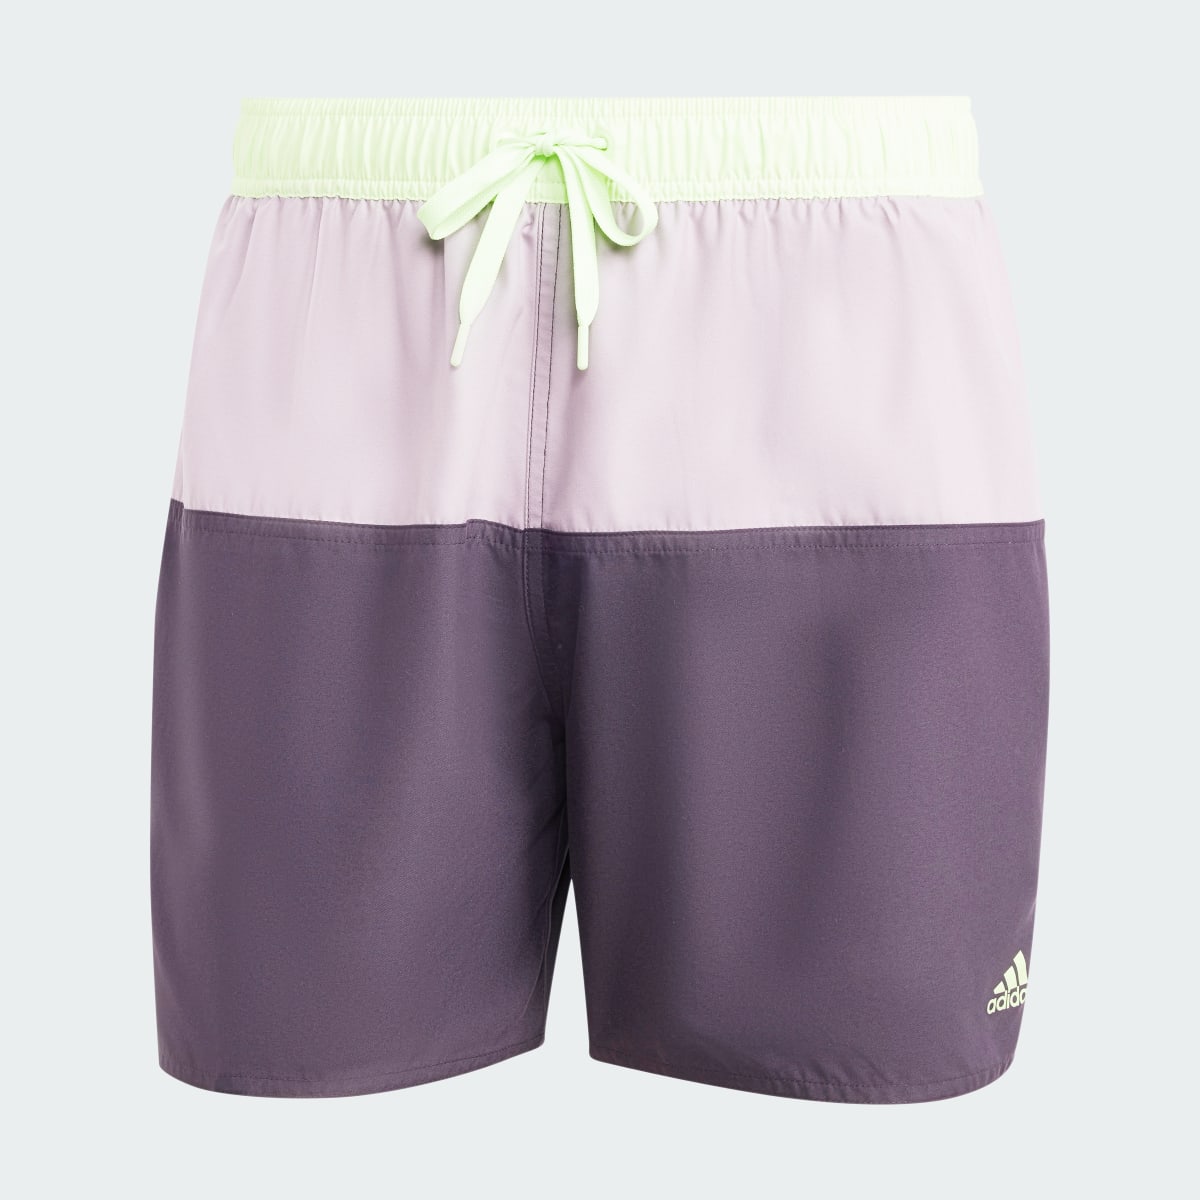 Adidas Colorblock CLX Swim Shorts. 4